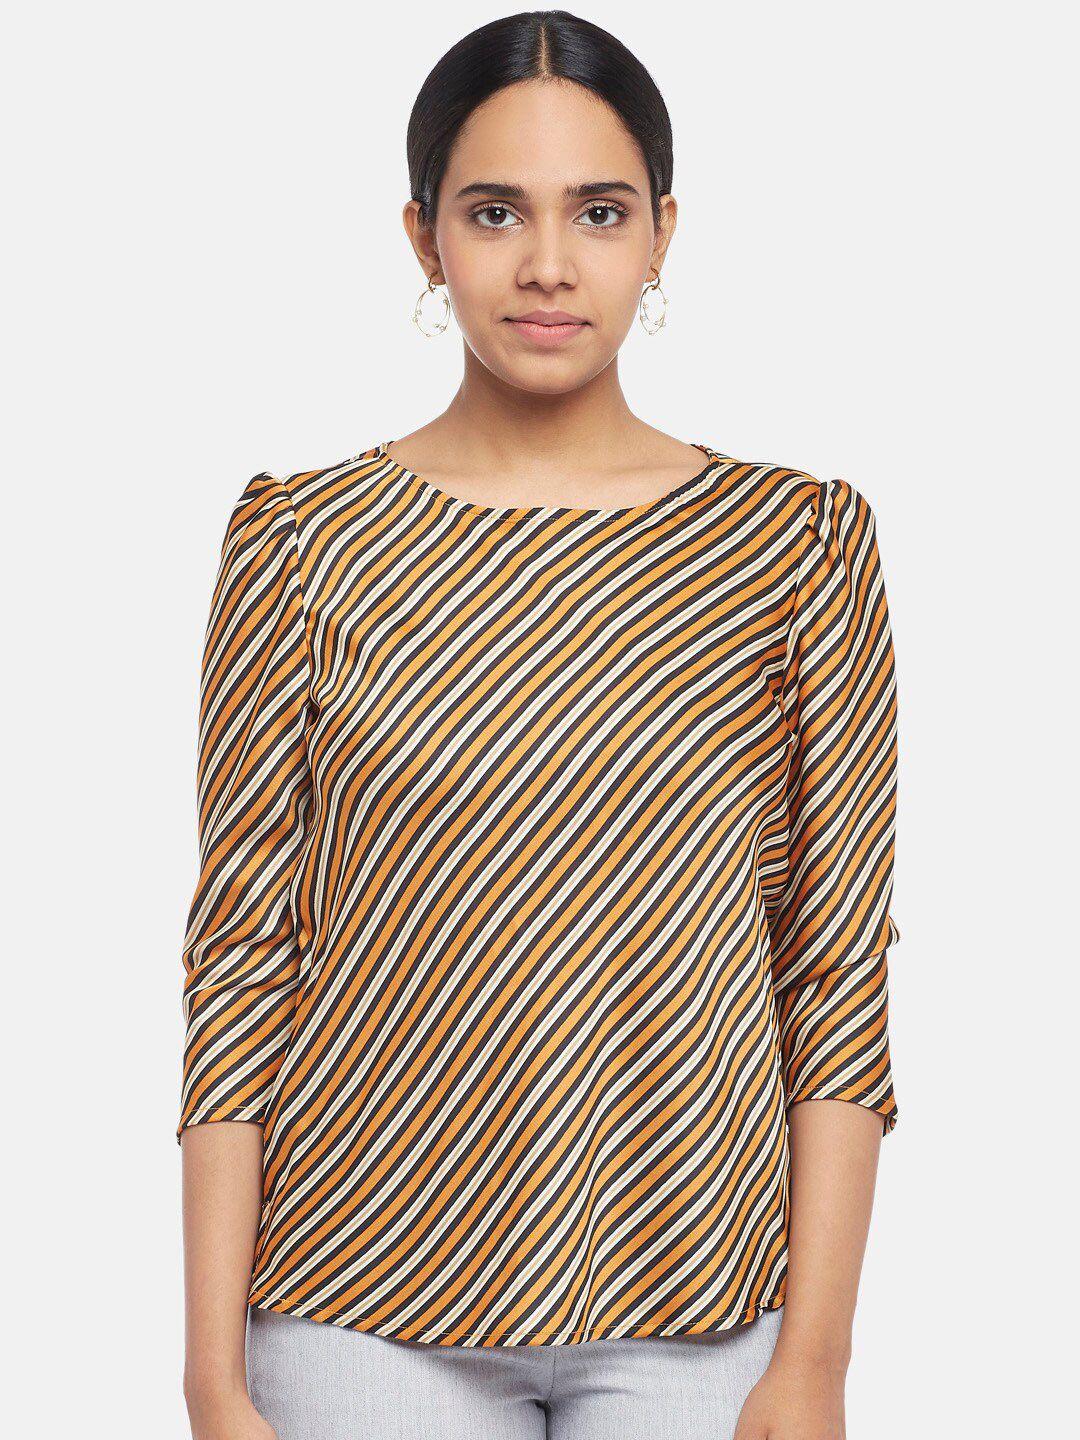 annabelle by pantaloons women mustard yellow & black striped regular top